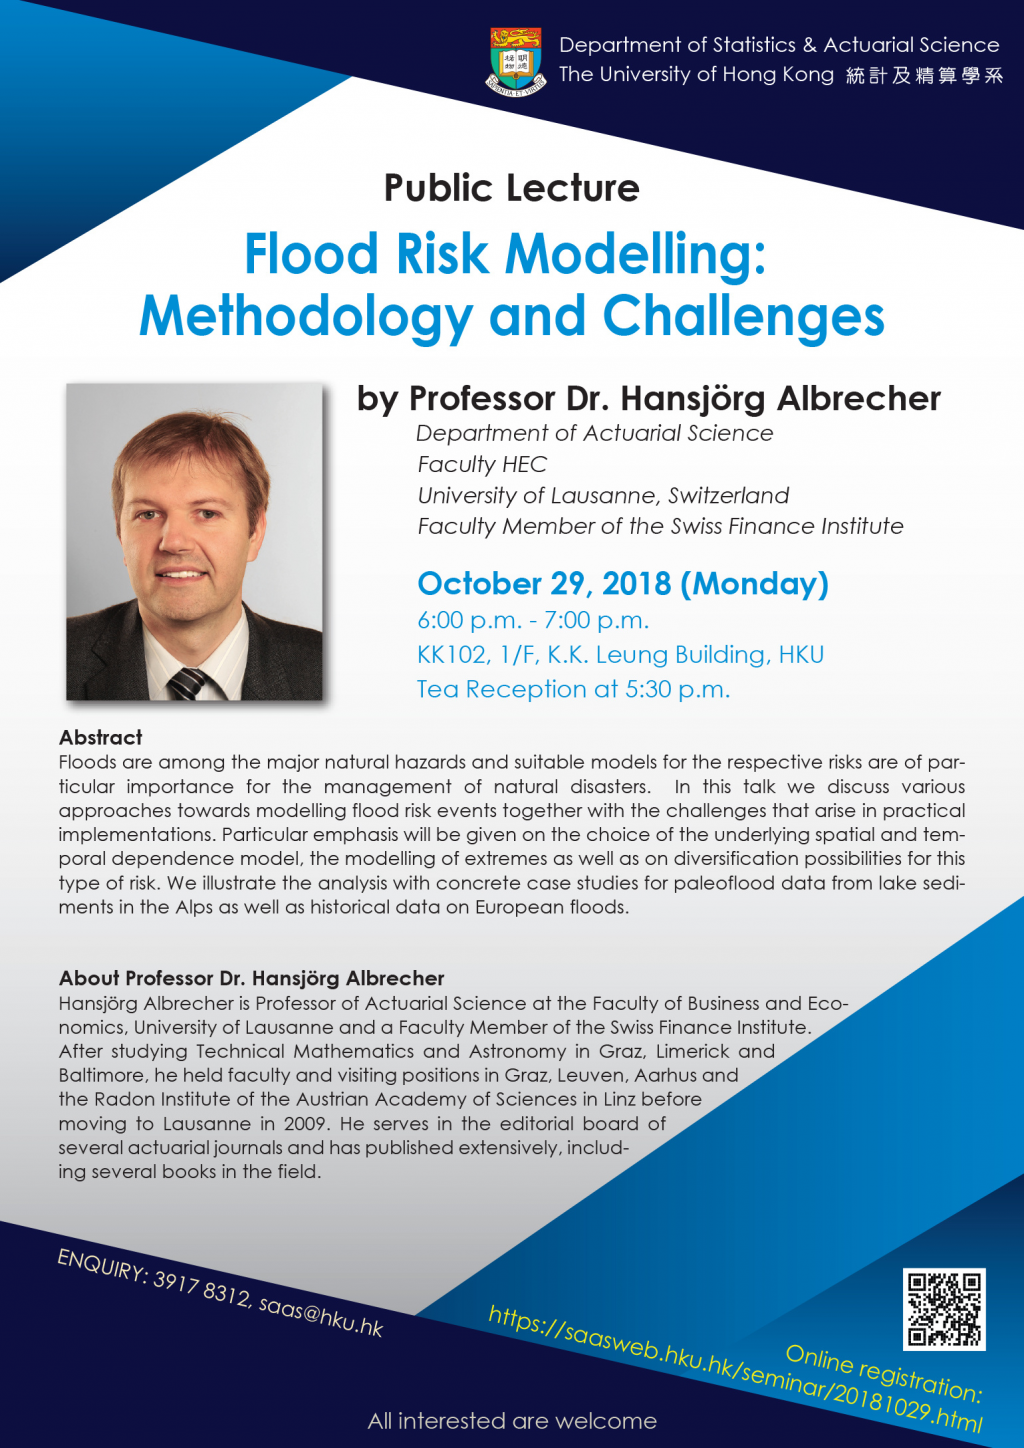 Public Lecture on 'Flood Risk Modelling: Methodology and Challenges' by Professor Dr. Hansjörg Albrecher on October 29, 2018